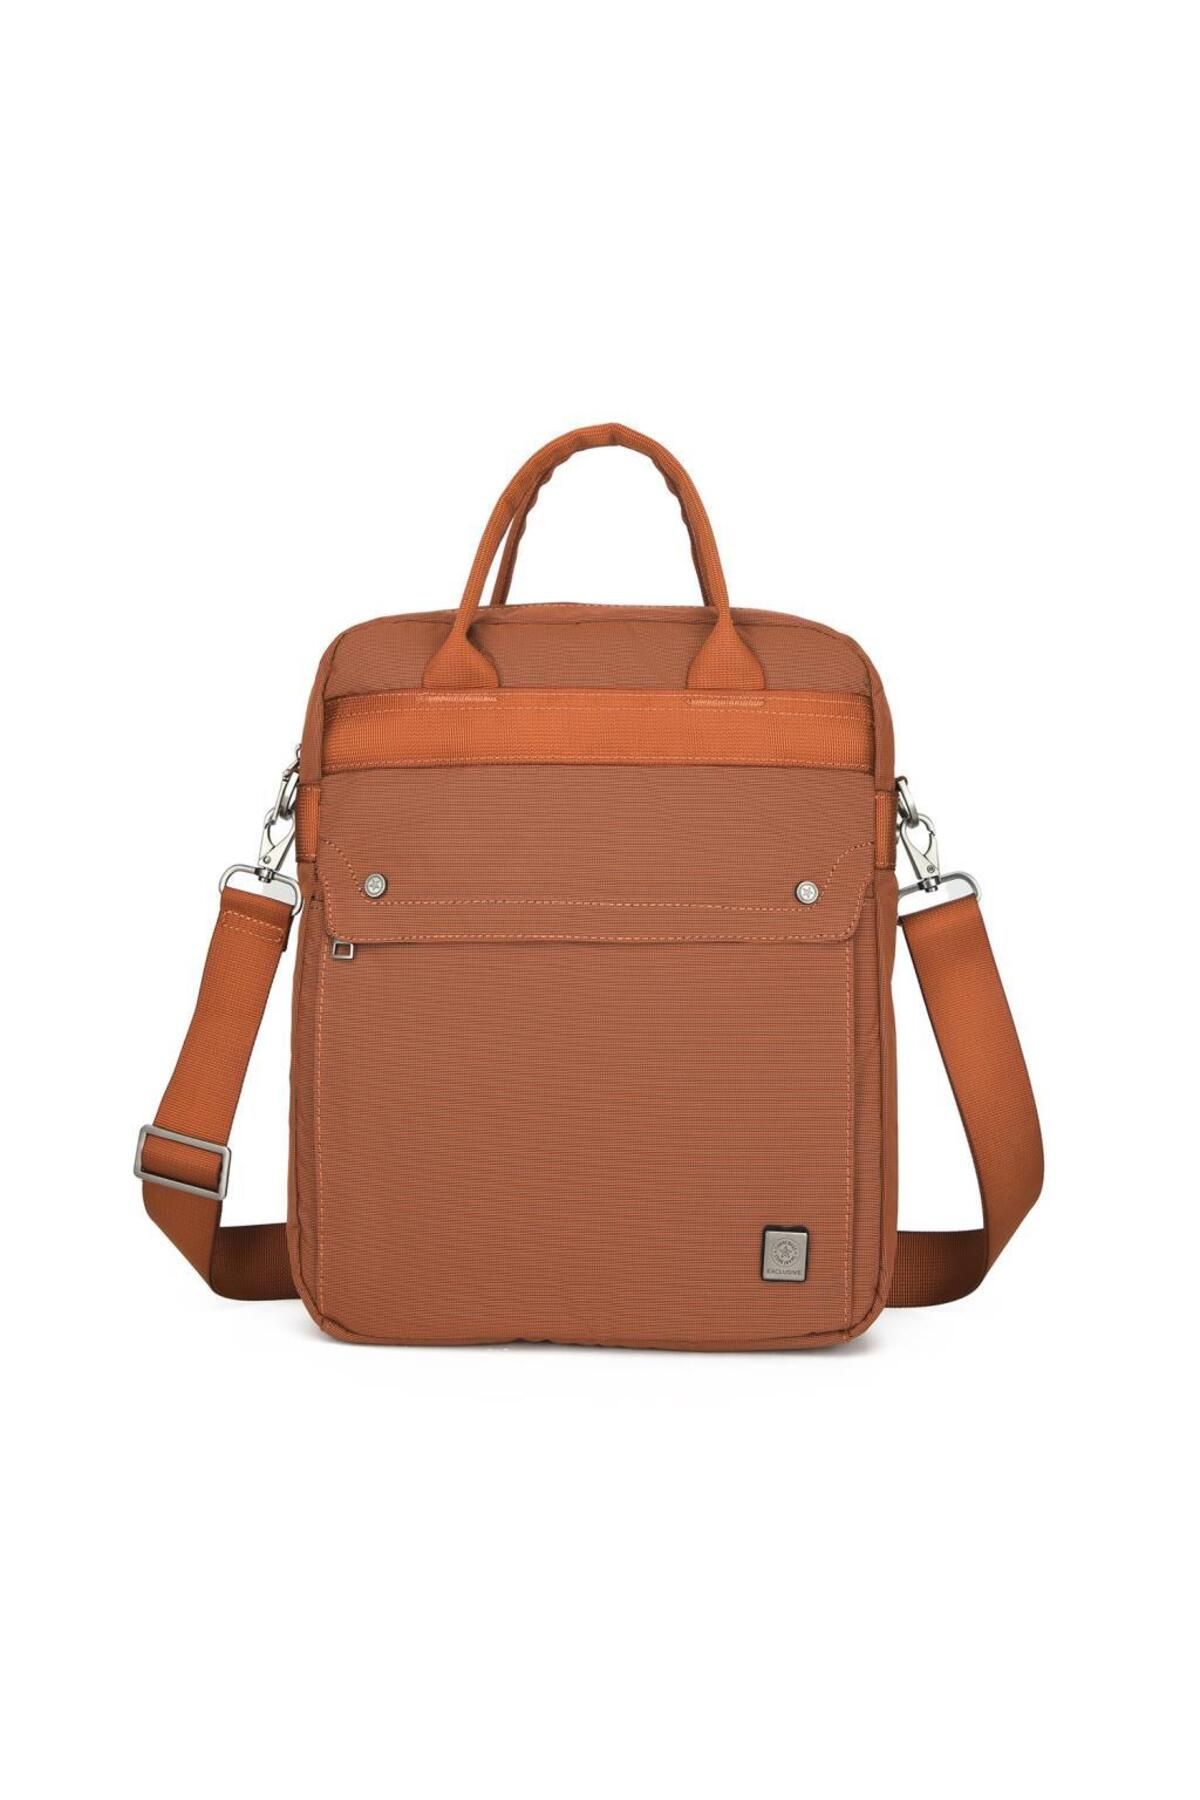 Smart Bags Exclusive Serisi Uniseks Tablet ve Laptop Çantası Smart Bags 8707